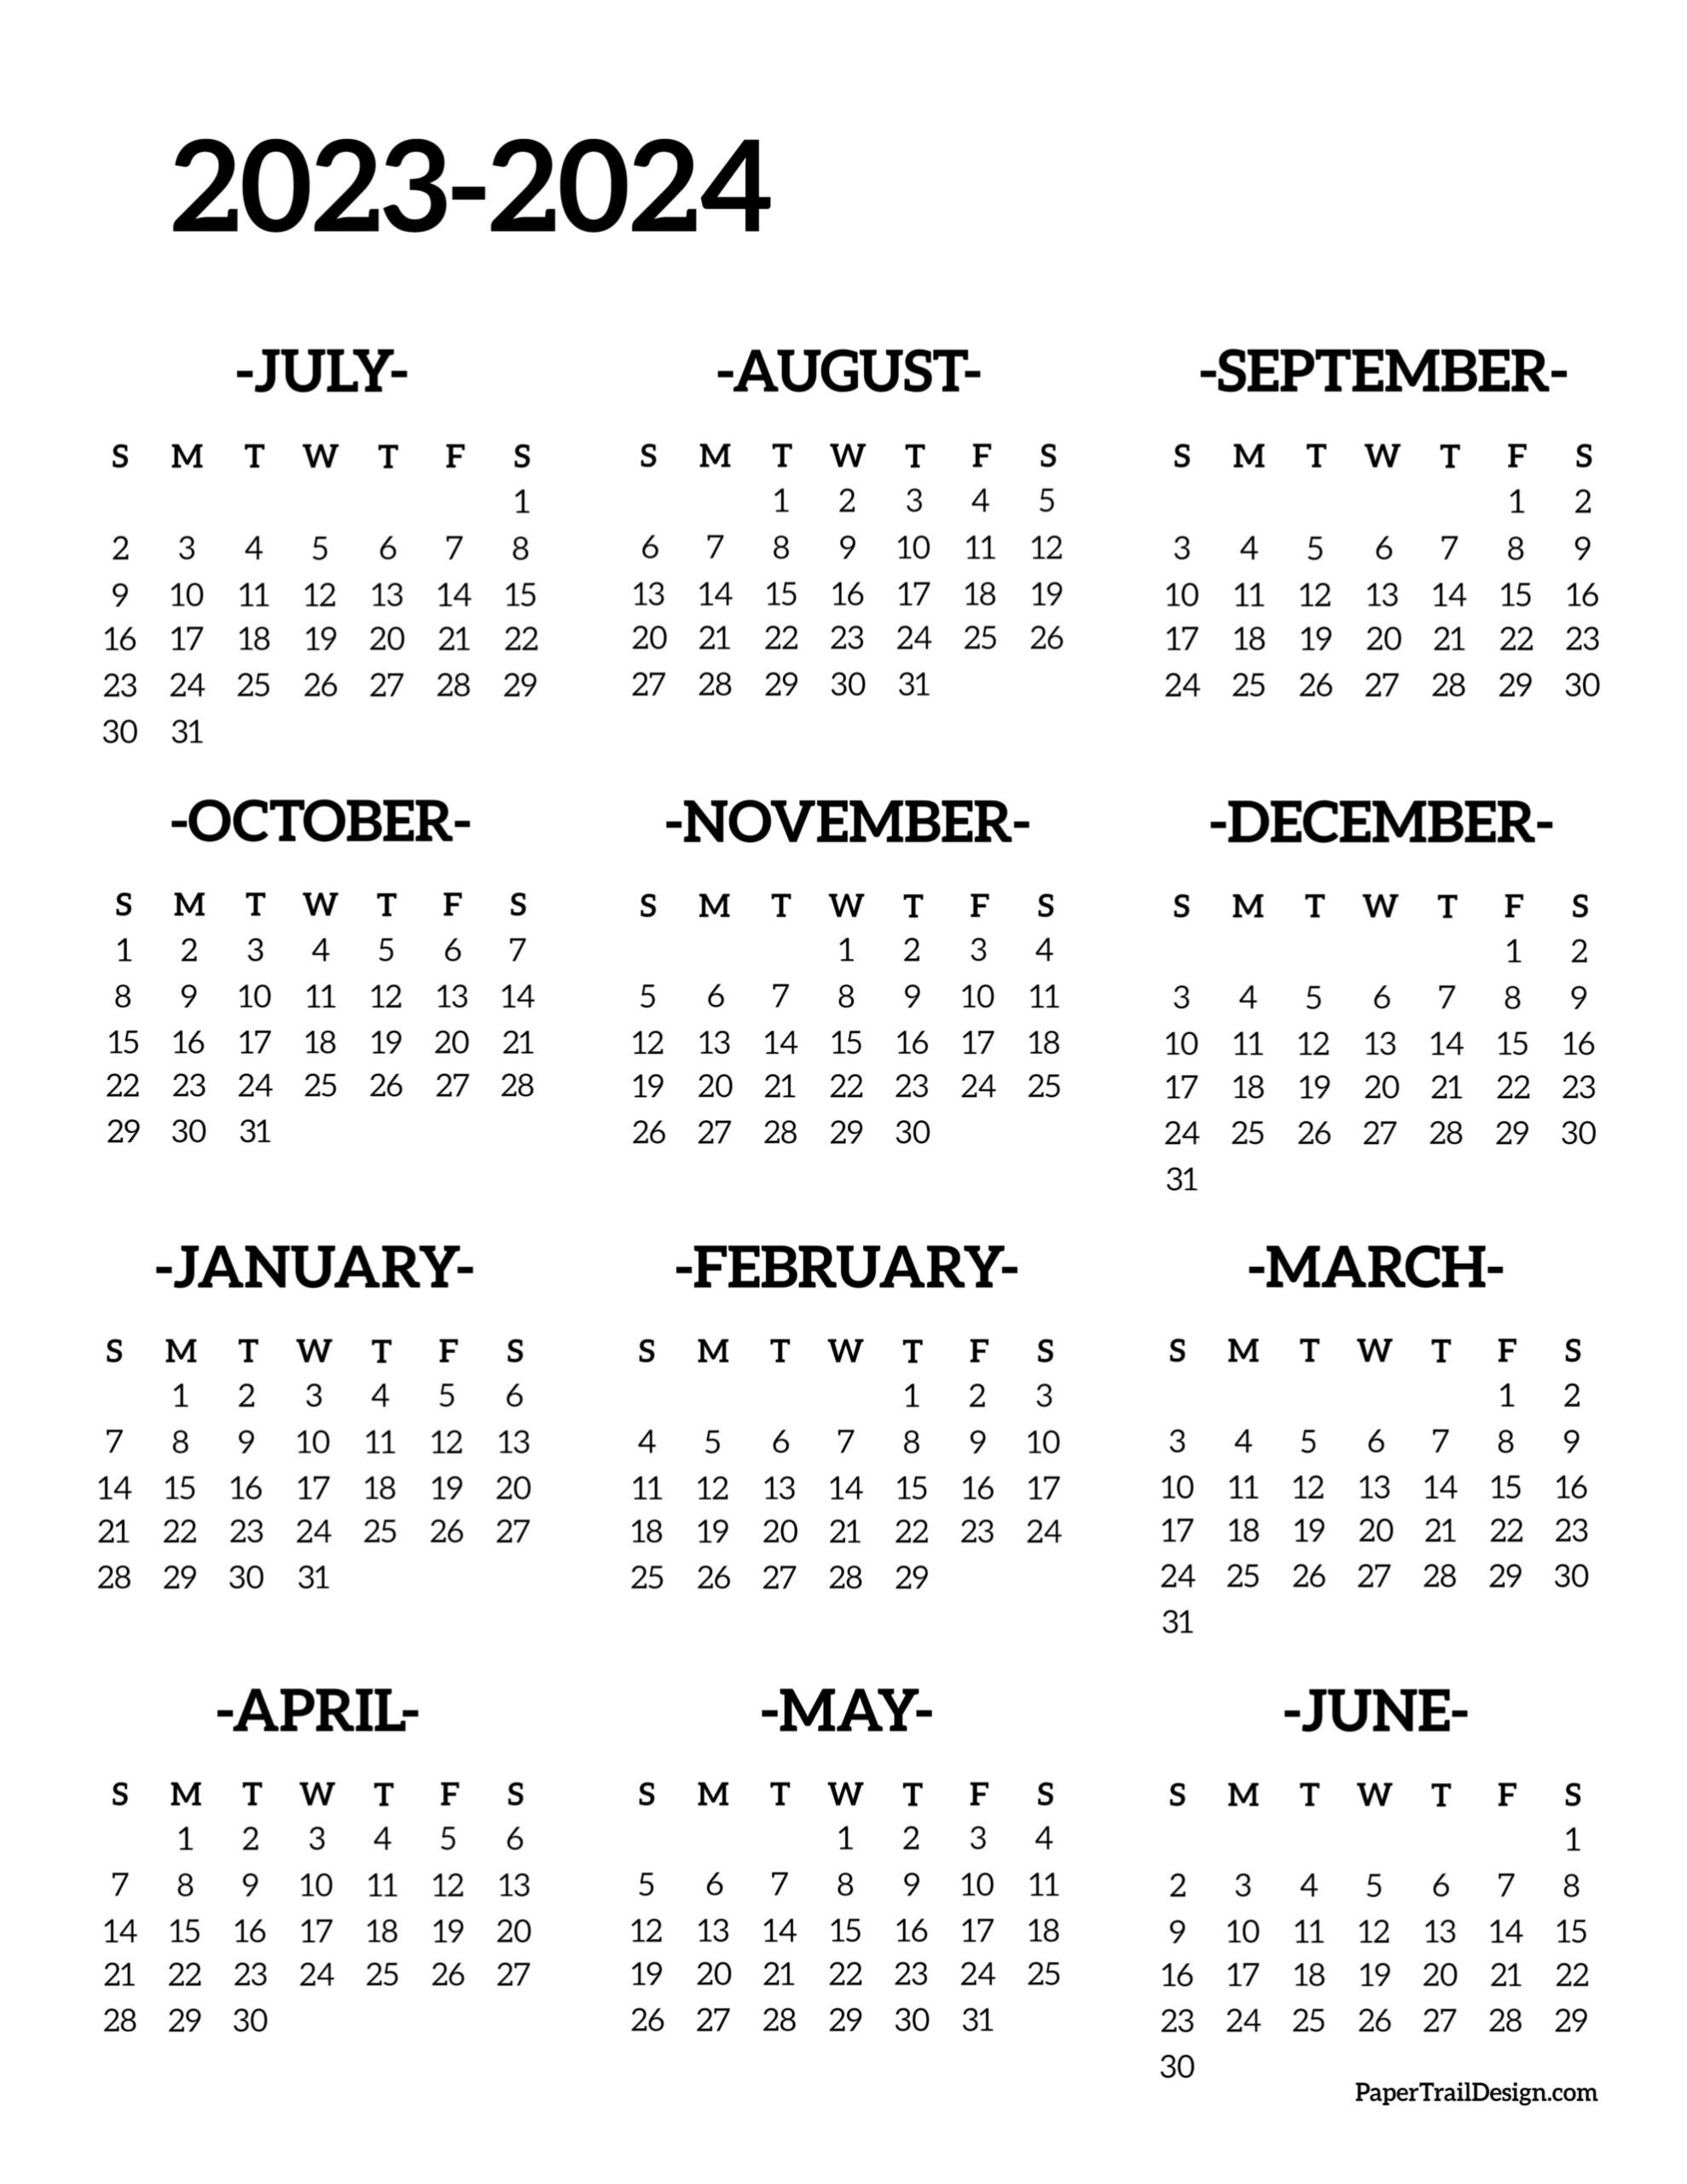 2023-2024 School Year Calendar Free Printable - Paper Trail Design for 2023 2024 Printable Calendar